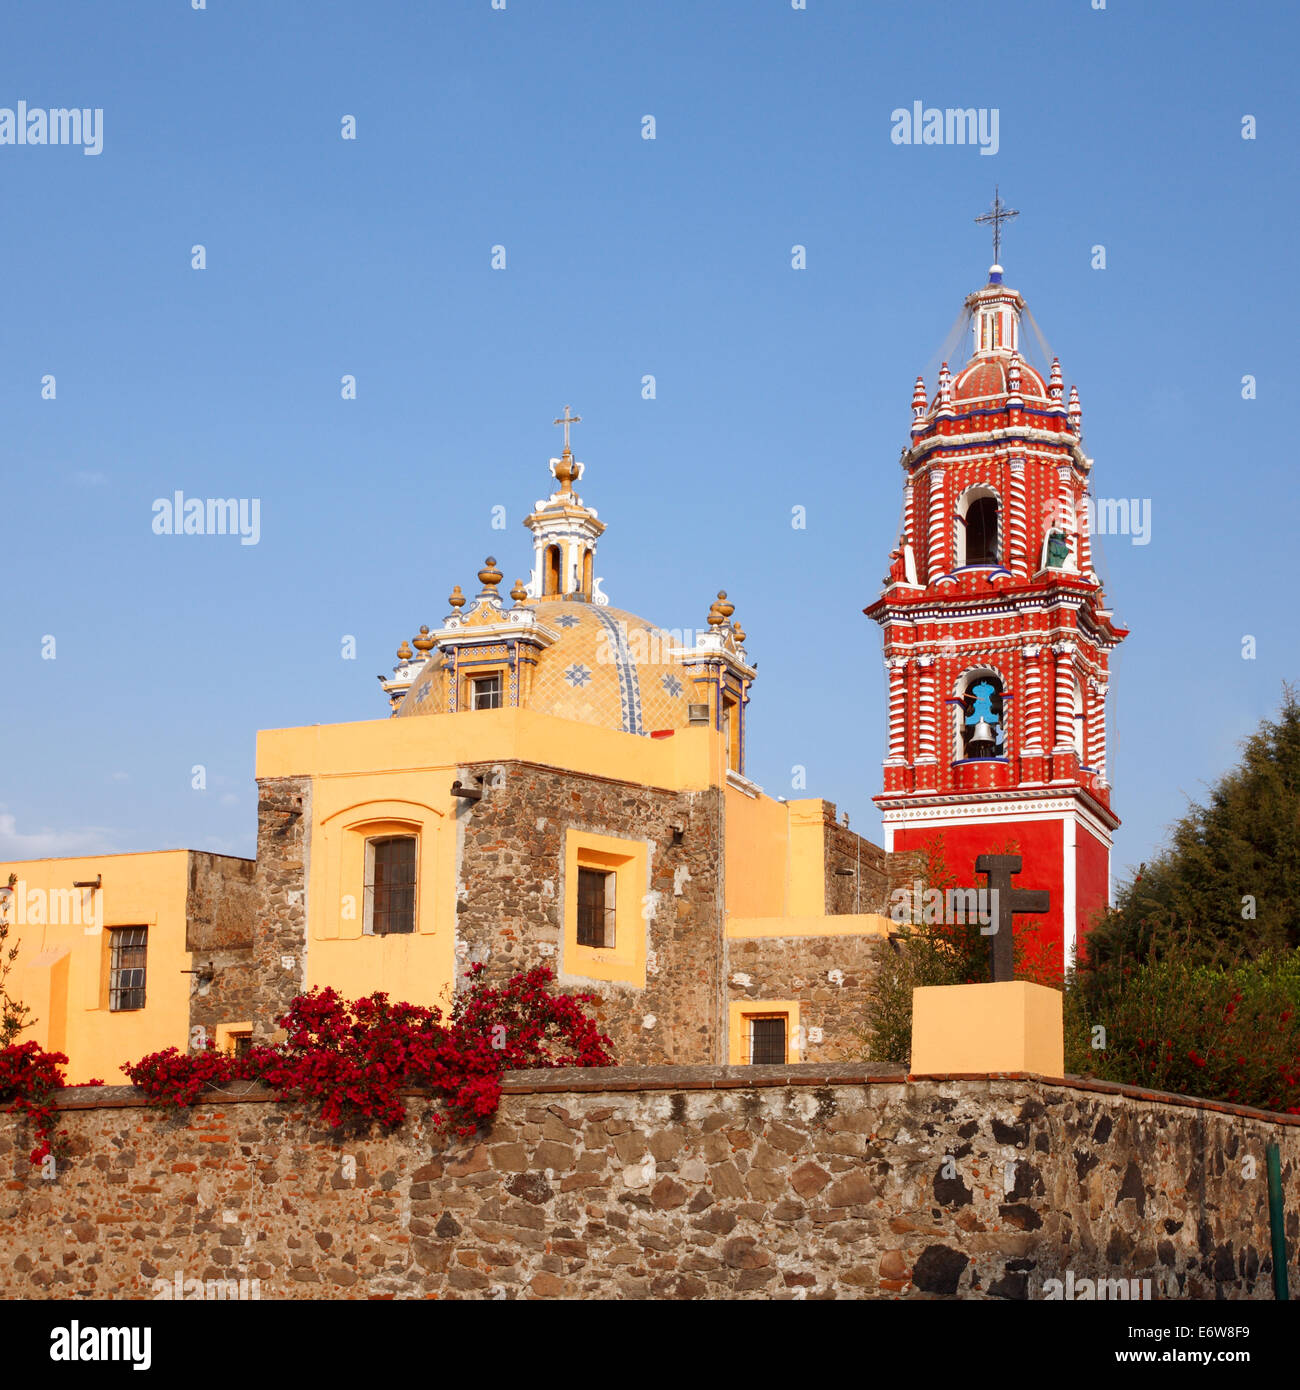 Temple of santa maria tonantzintla hi-res stock photography and images -  Alamy